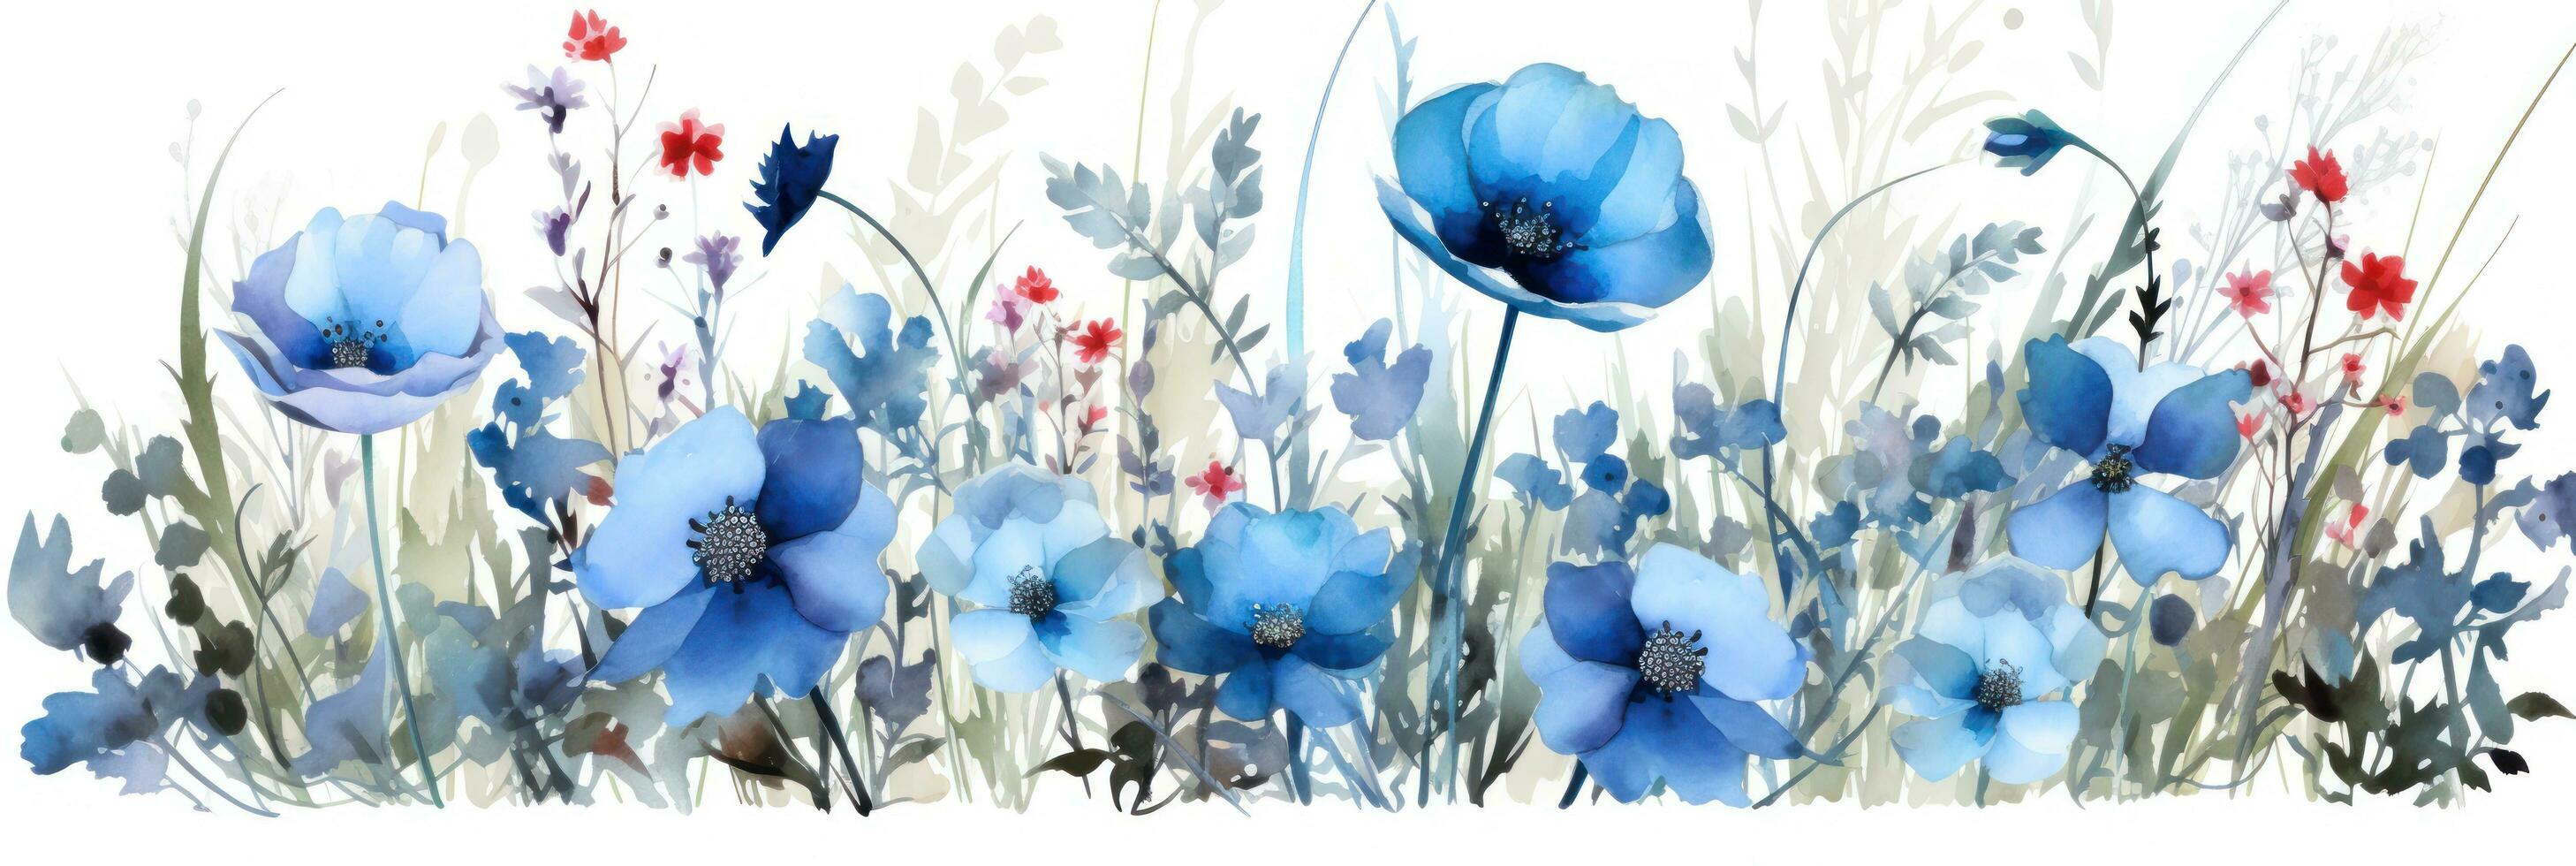 Watercolor blue flowers photo